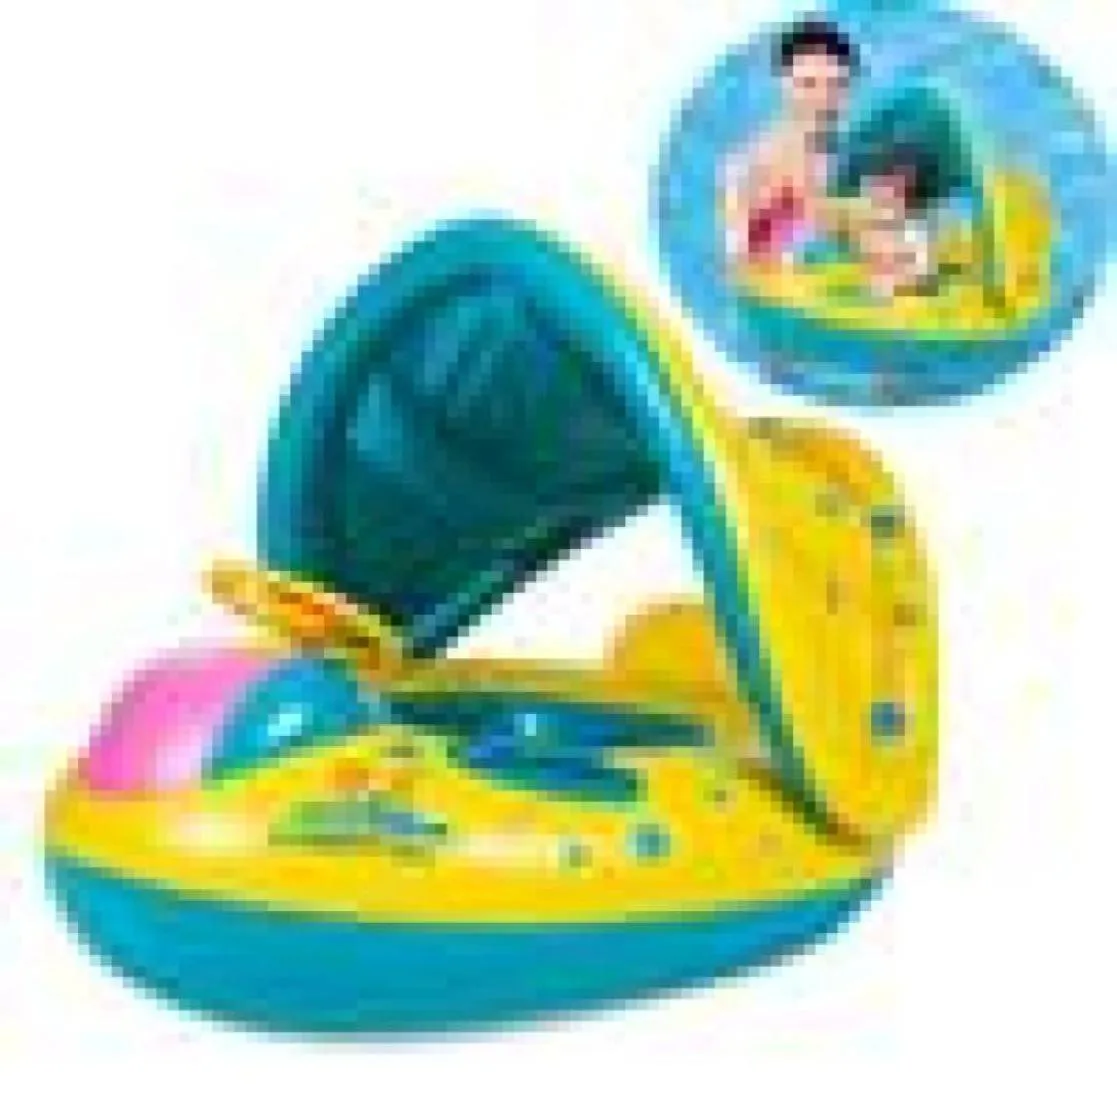 Toddler Baby Baby Nath Swim Float Kid Kid Sage Boat Boat Silon avec CA1595879